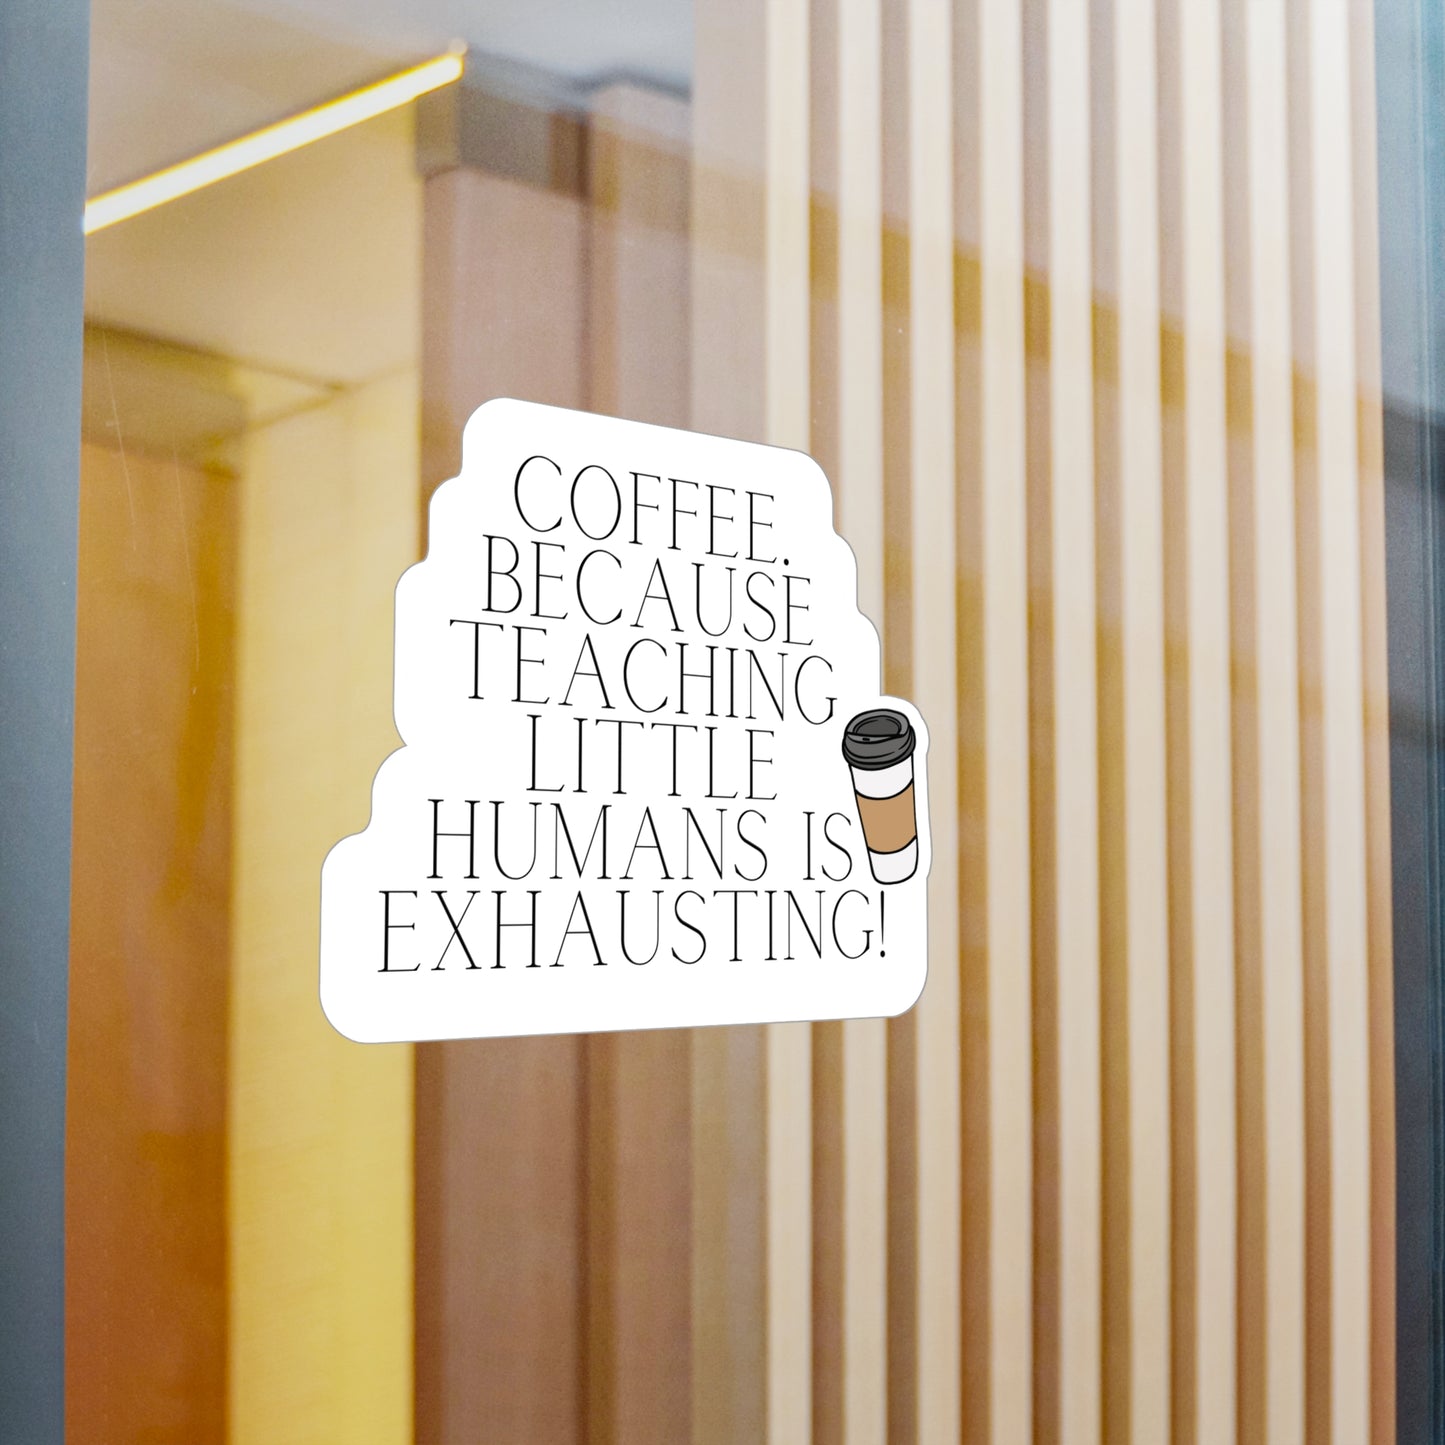 Coffee. Because teaching little humans is exhausting! | Sticker, Coffee, Teacher, Teaching